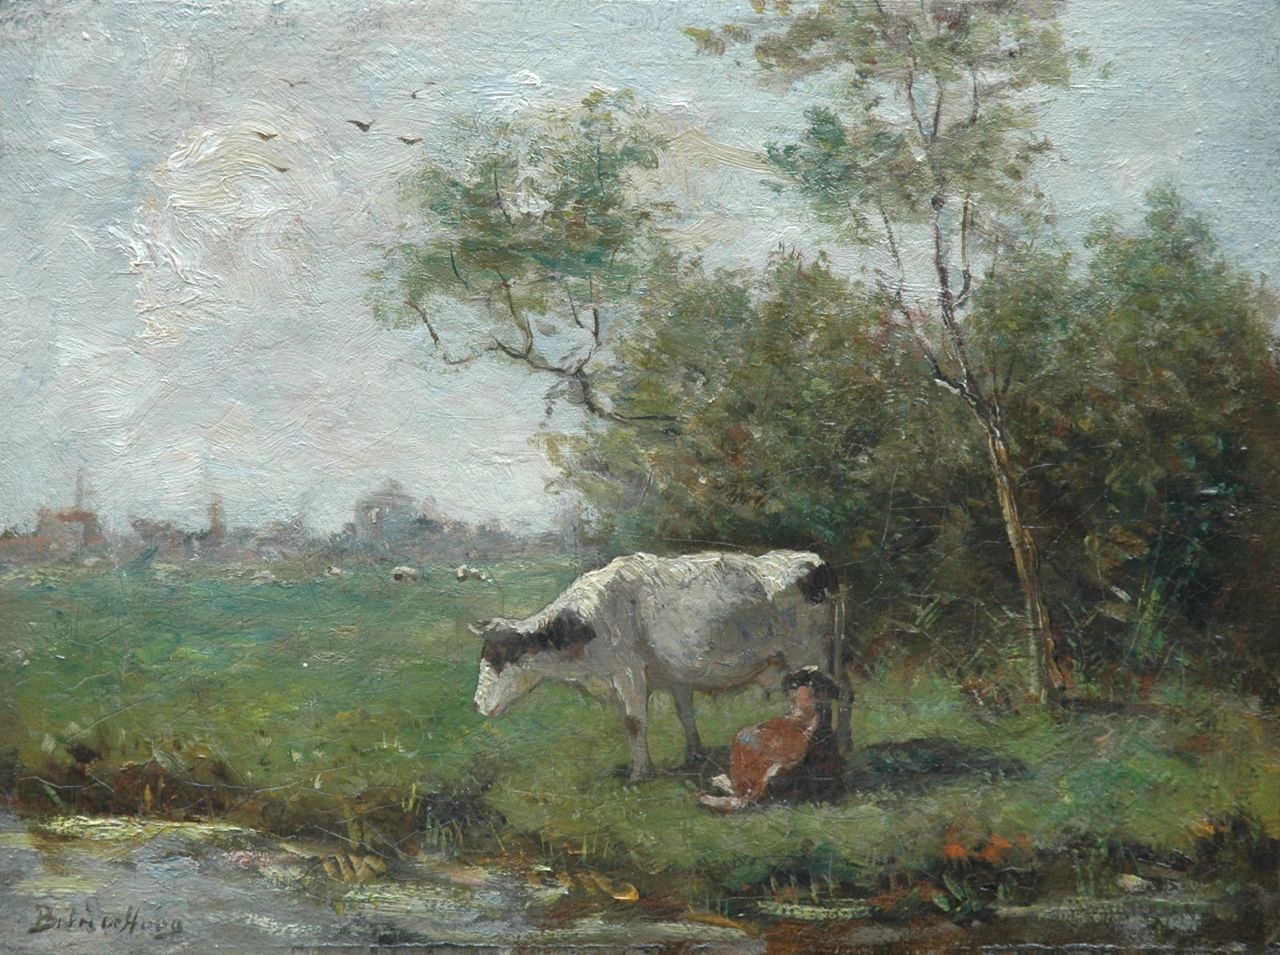 Hoog J.B. de | Johan 'Bernard' de Hoog, Cow and calf in a meadow, Öl auf Leinwand 25,8 x 34,4 cm, signed l.l.